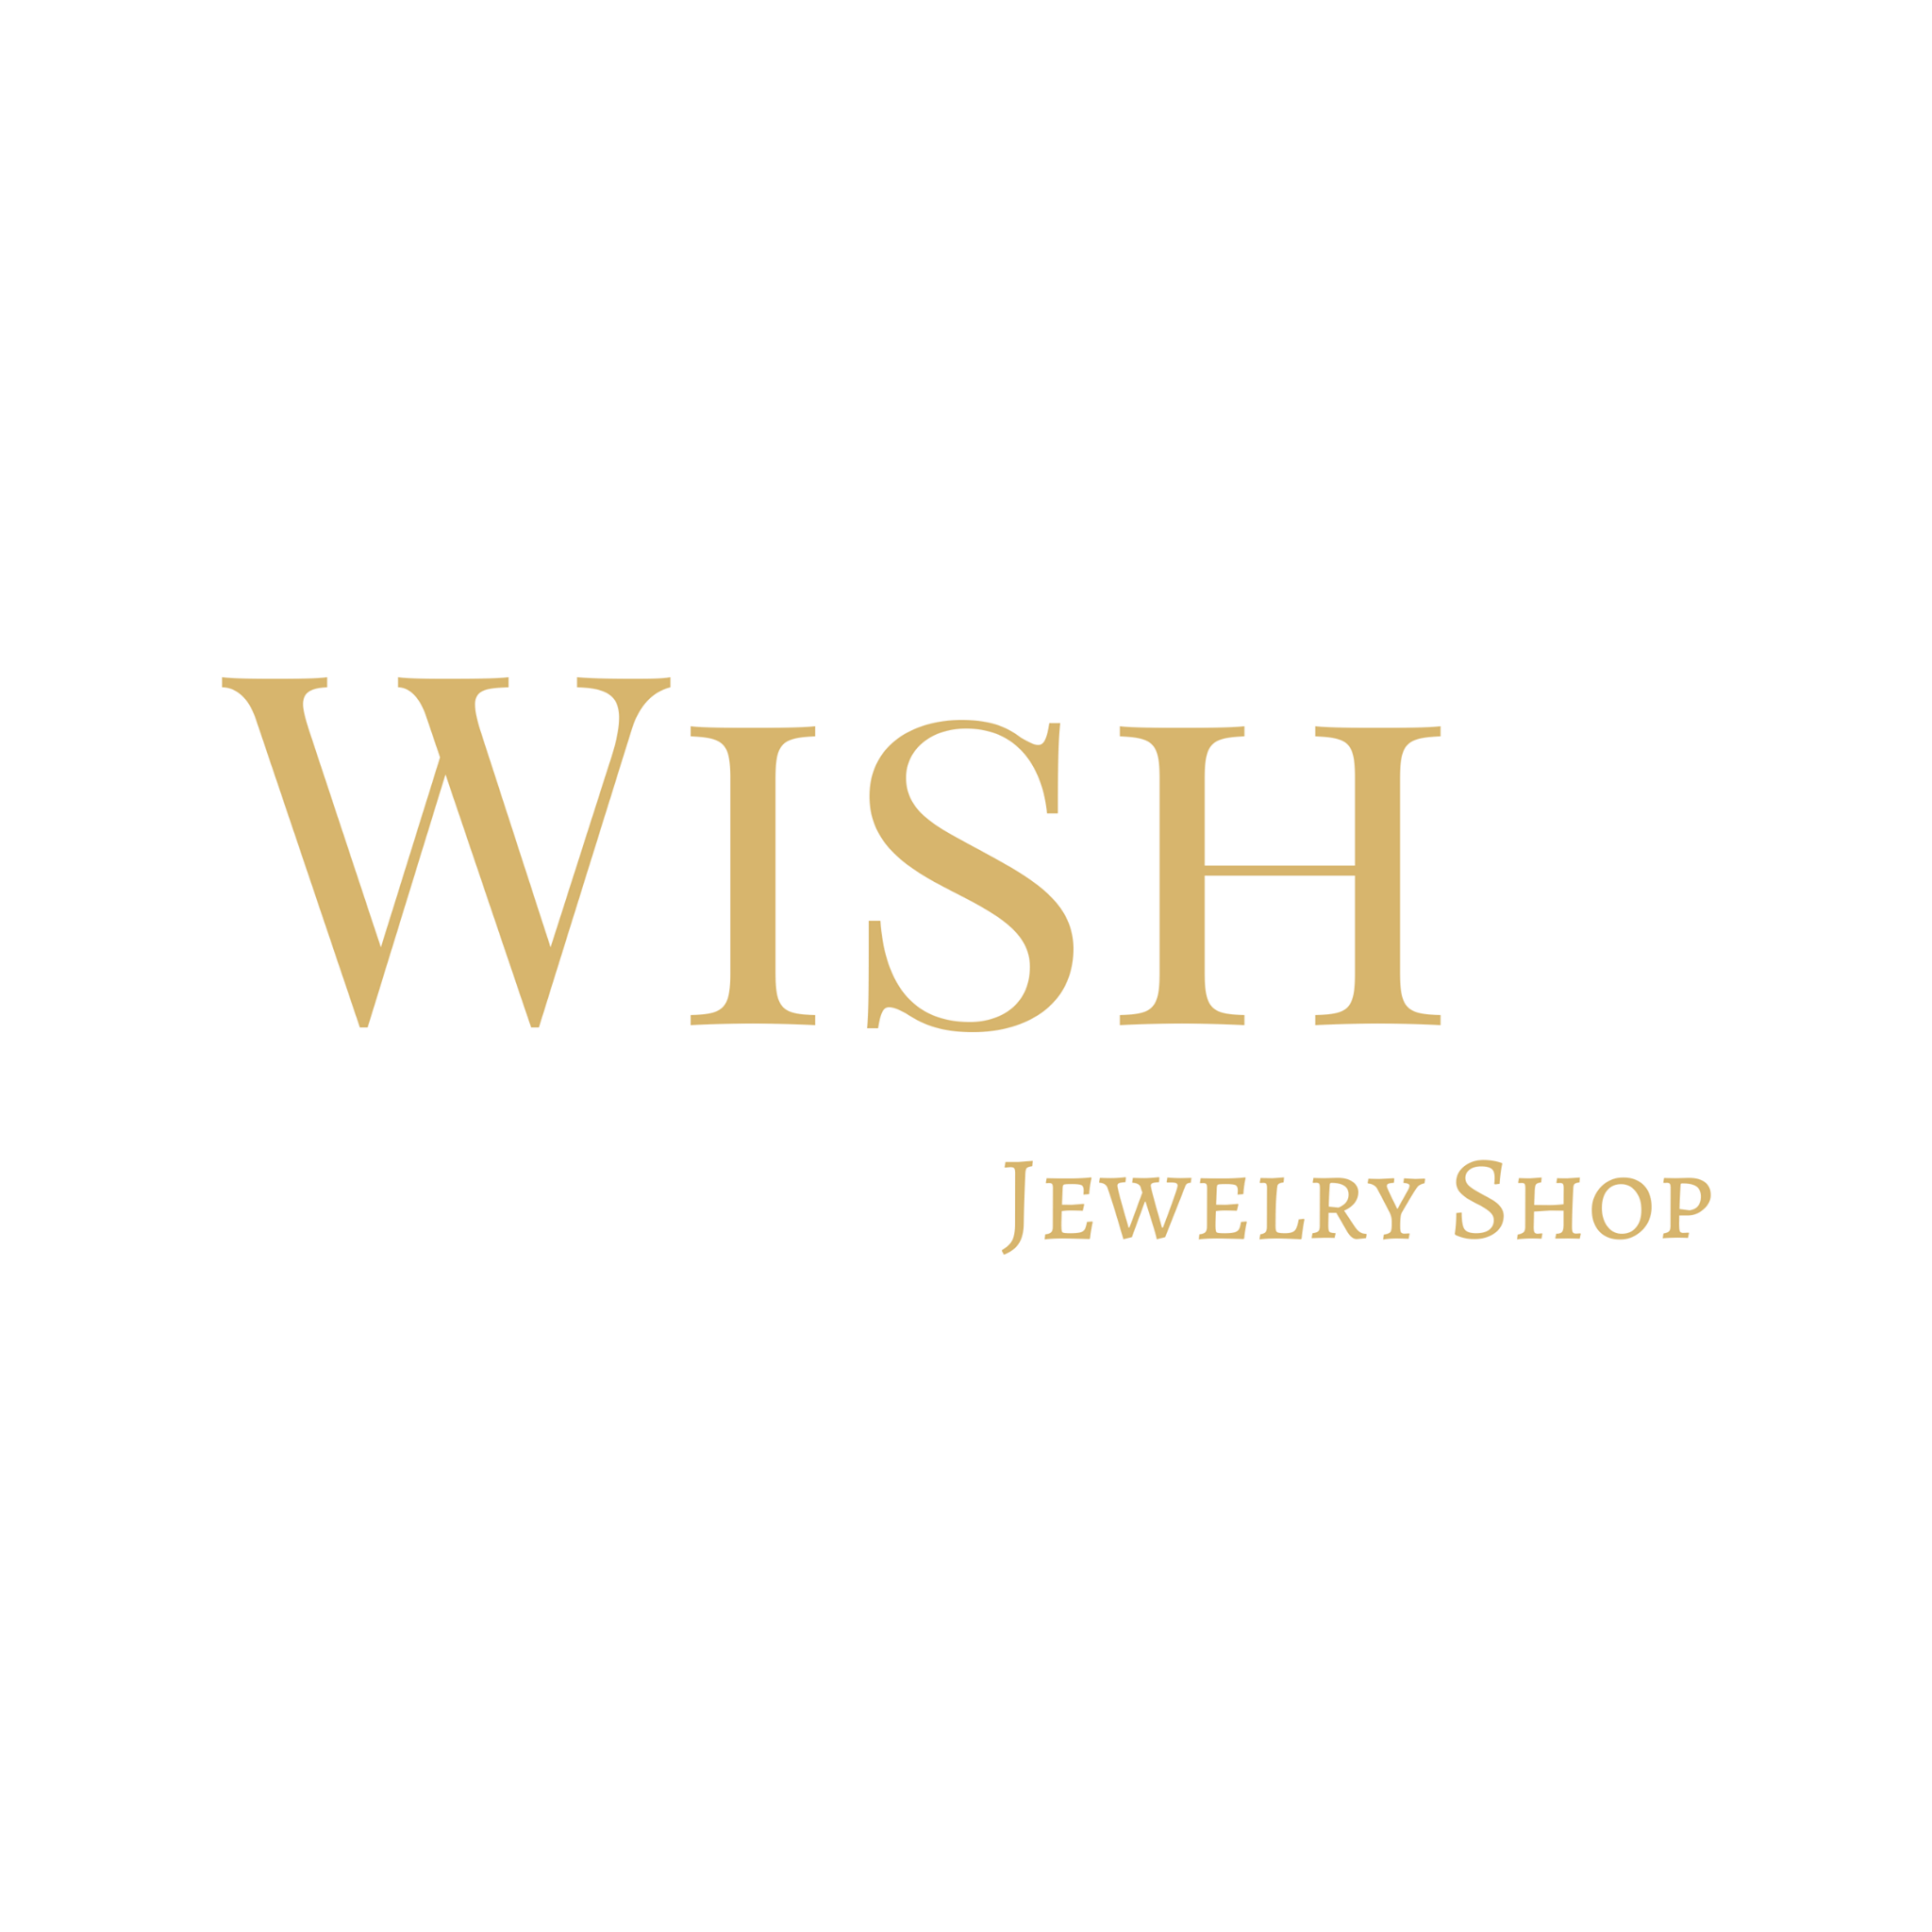 https://alamedamarket.pt/wp-content/uploads/2021/12/Wish-Jewelry-Shop.png